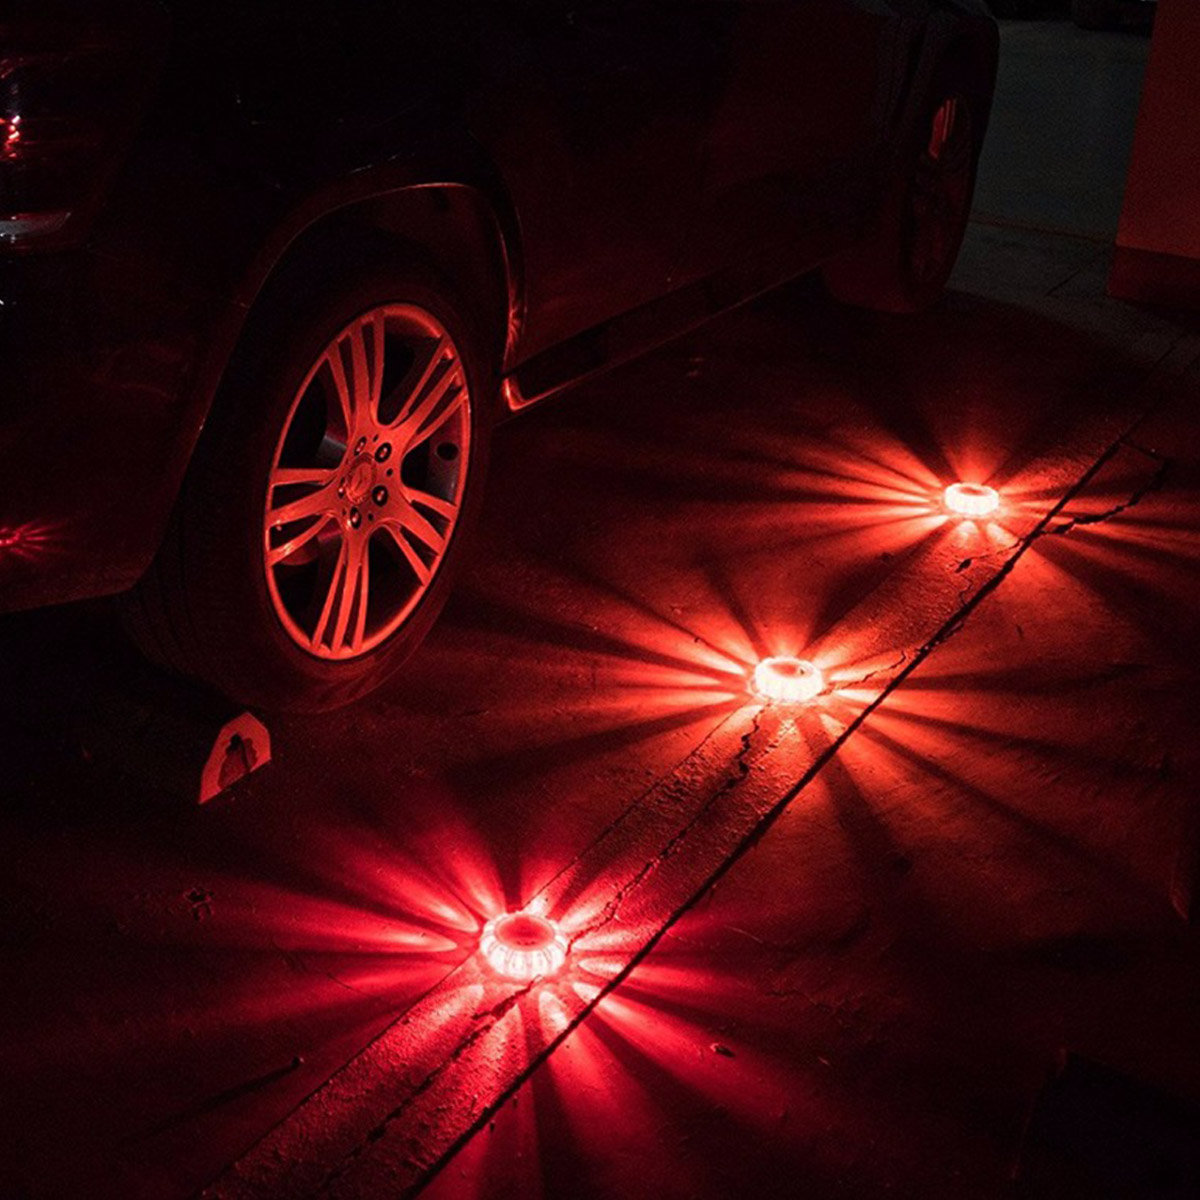 3pcs-LED-Road-Flares-Flashlight-Warning-Roadside-Safety-Light-for-Car-Boat-Truck-Emergency-1219213